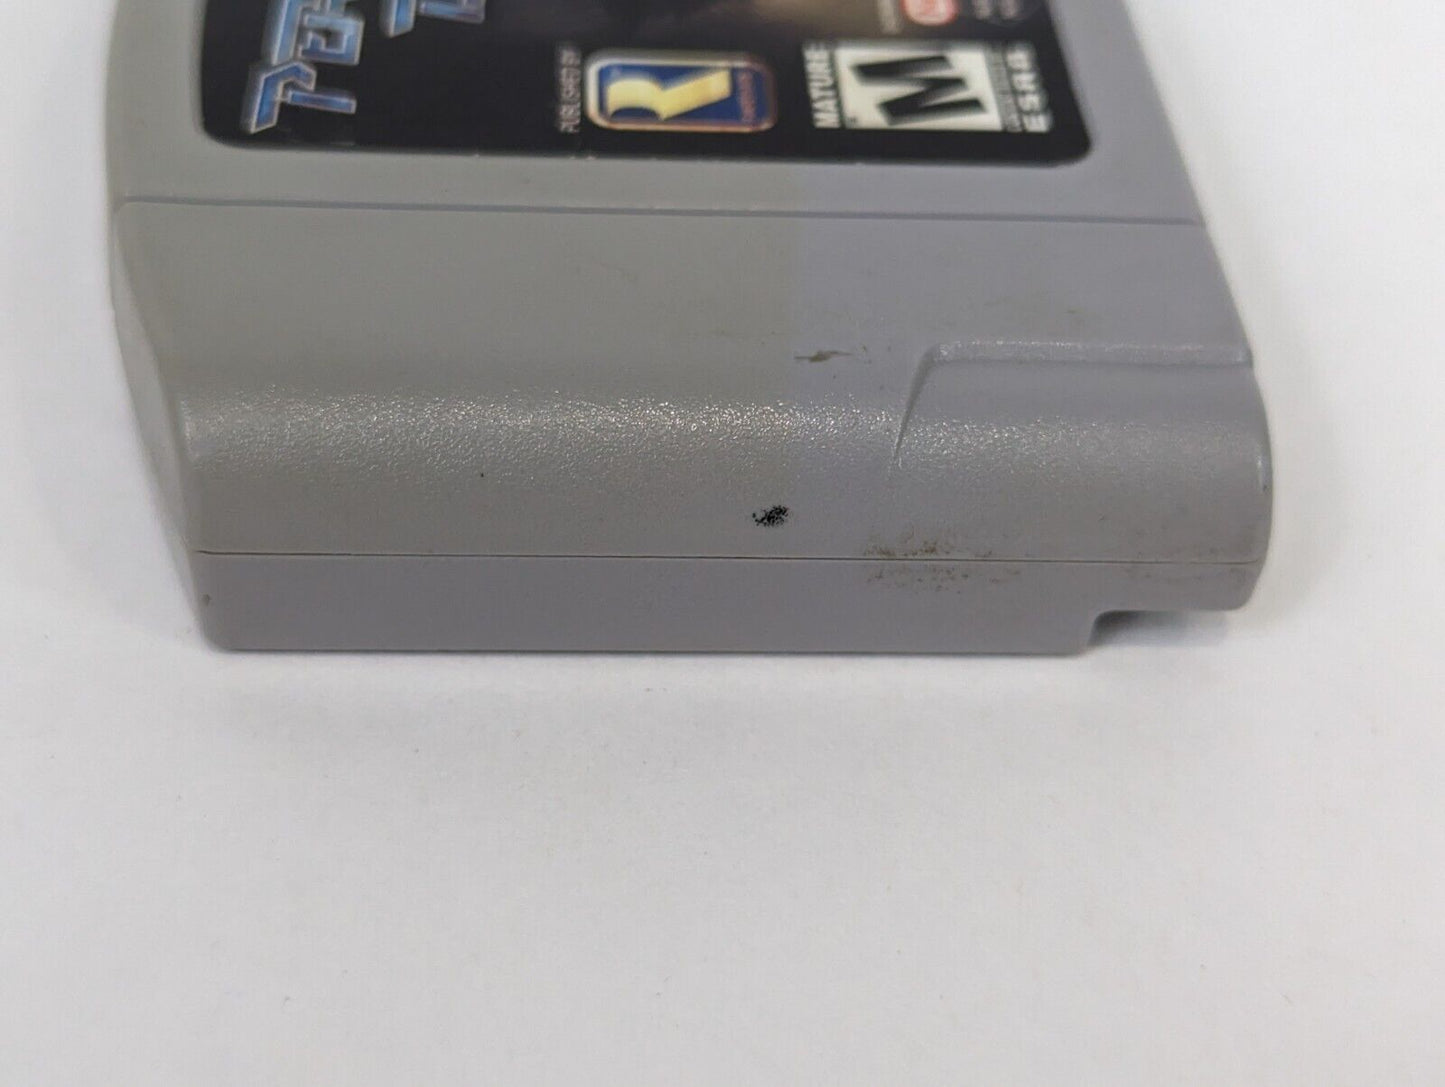 Nintendo 64 Perfect Dark Video Game Pak Cartridge